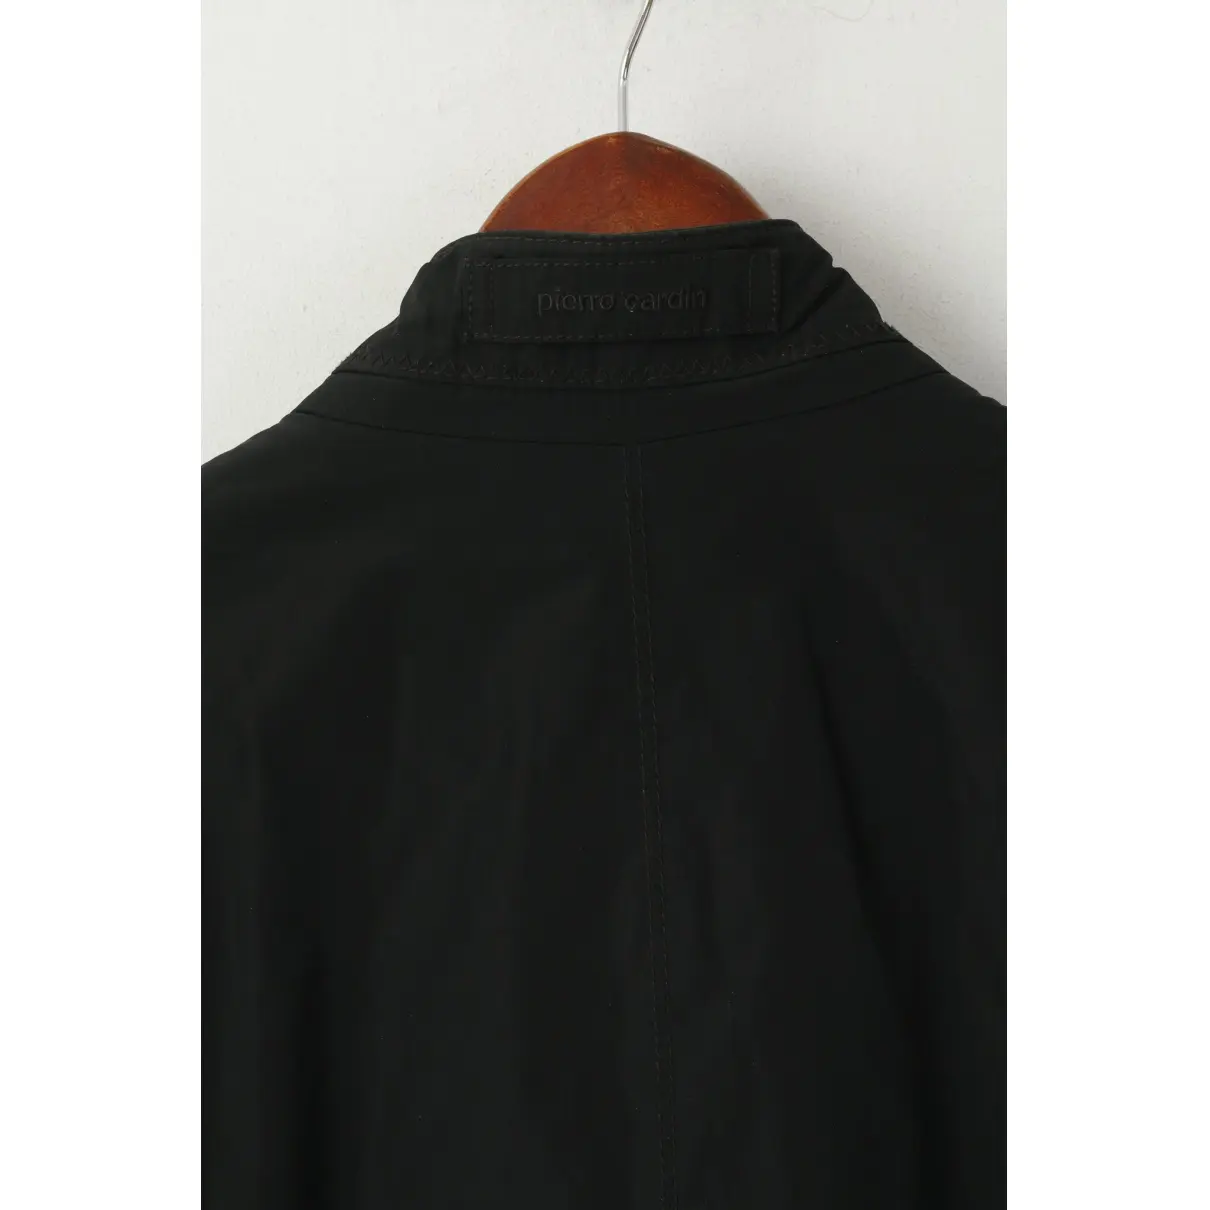 Buy Pierre Cardin Jacket online - Vintage